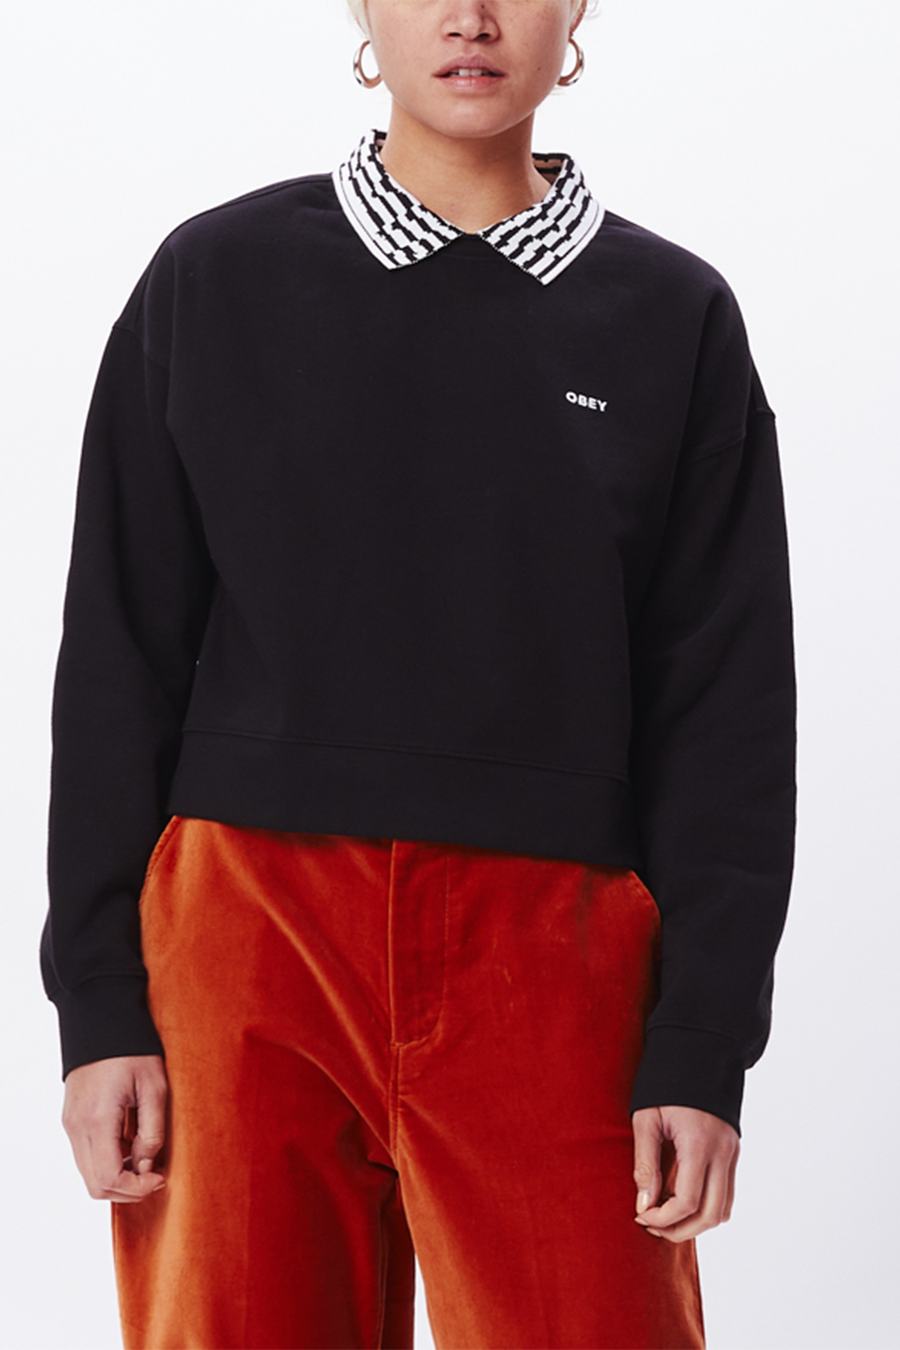 Woodberry Collard Sweatshirt | Black Multi - Main Image Number 1 of 2